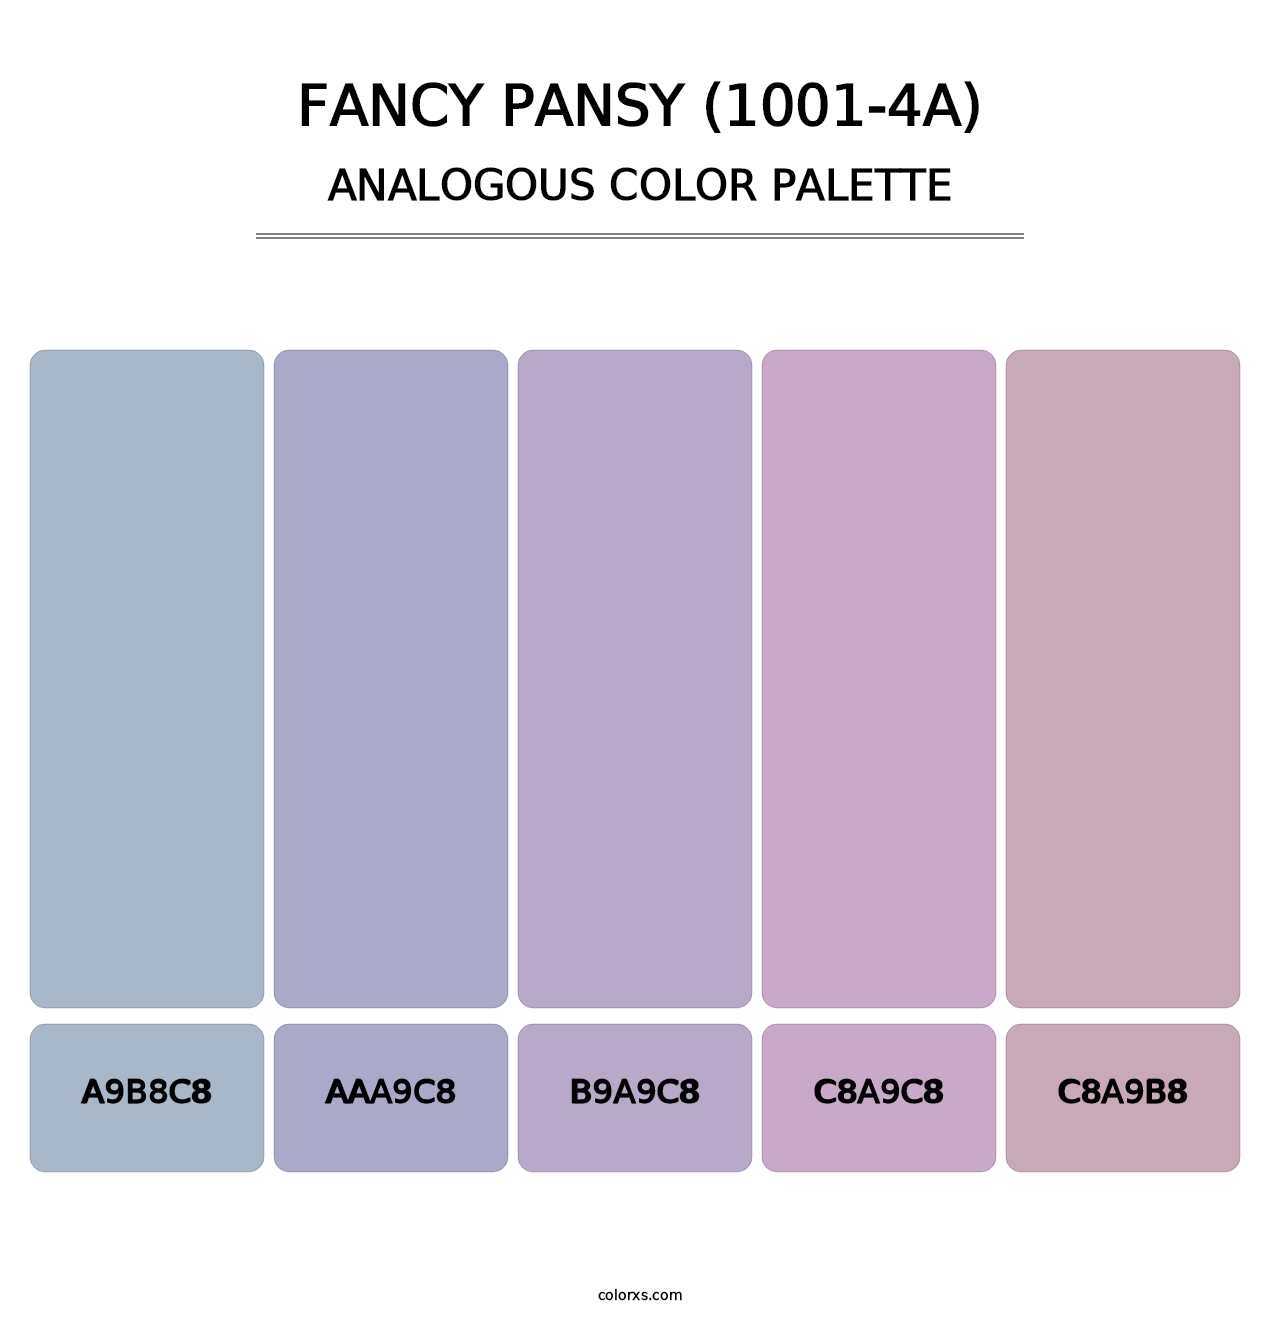 Fancy Pansy (1001-4A) - Analogous Color Palette